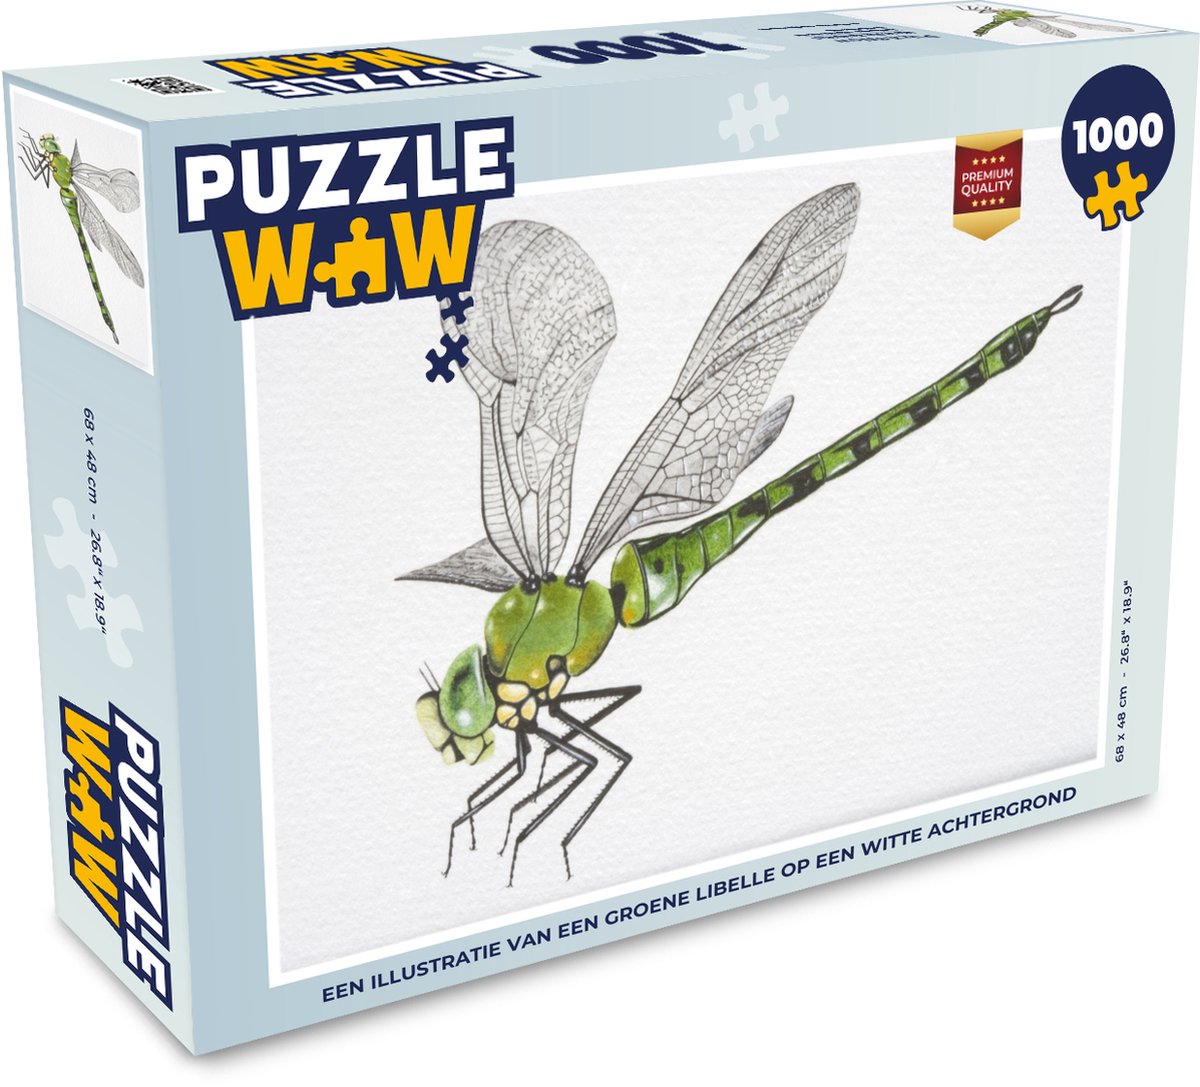 Puzzel een groene libelle - Legpuzzel - Puzzel 1000 stukjes volwassenen |  bol.com